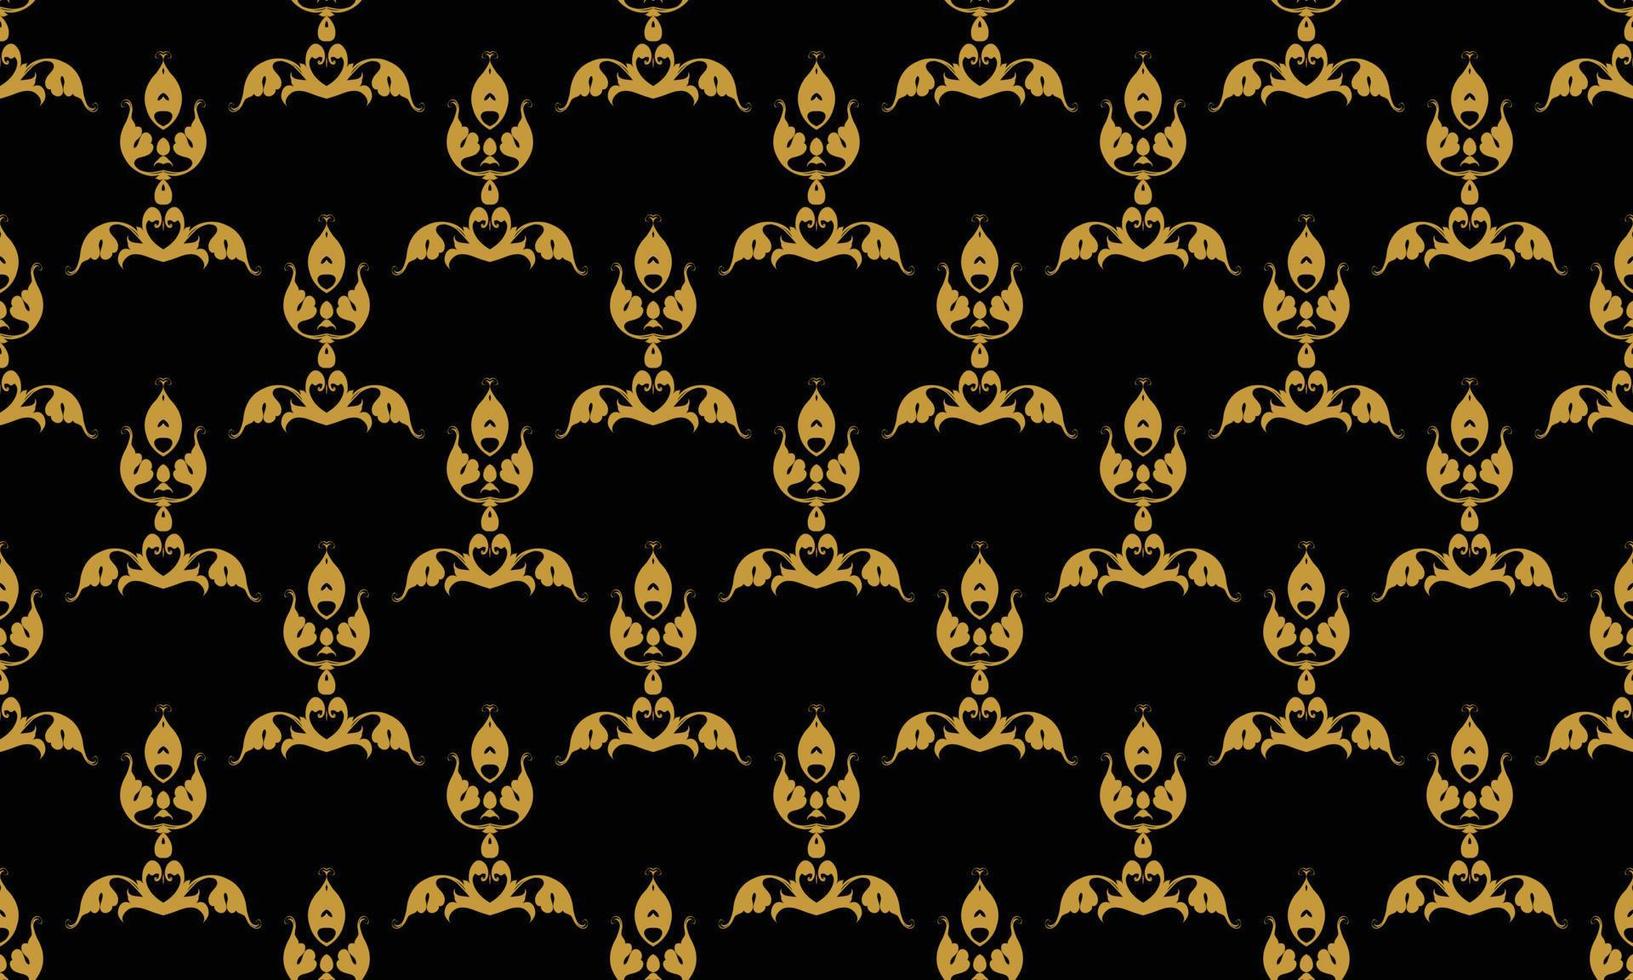 Damask Fleur de Lis pattern wallpaper vector seamless background Fleur de Lis pattern Scandinavian batik Digital texture Design for print printable fabric saree border.